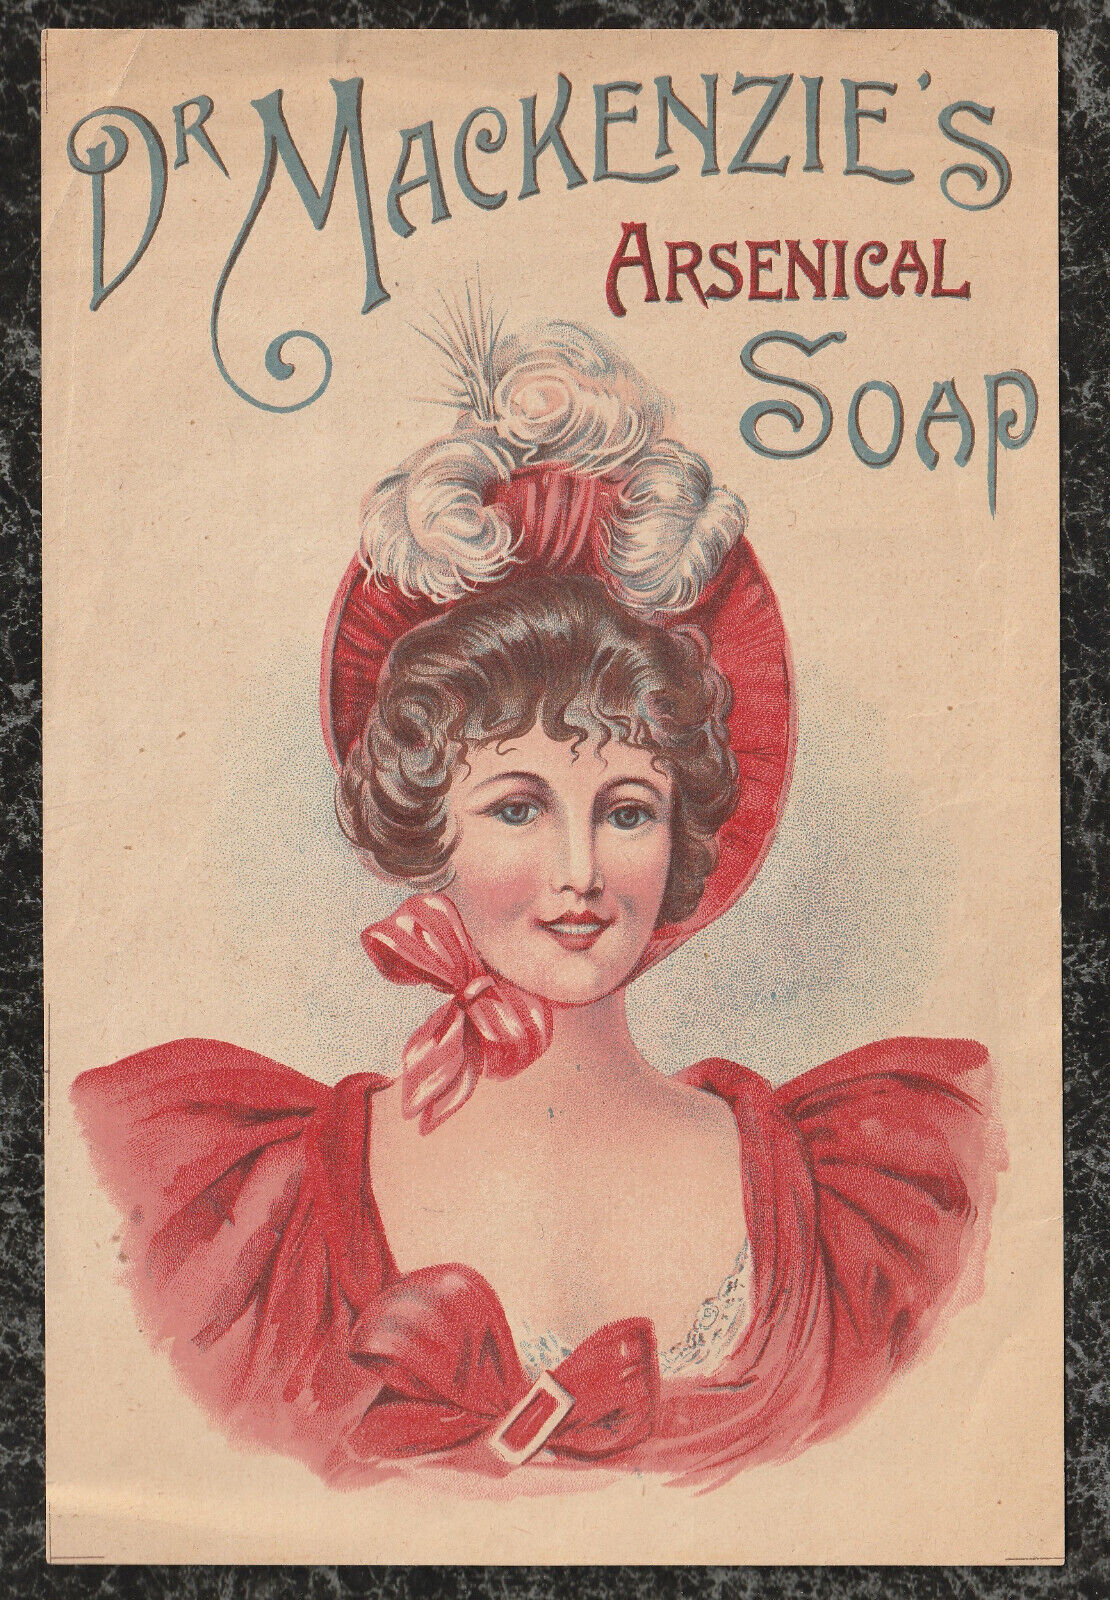 Rare Victorian Advertising Flyer Dr Mackenzie's Arsenical Soap 1896 UK 8 x 5.25